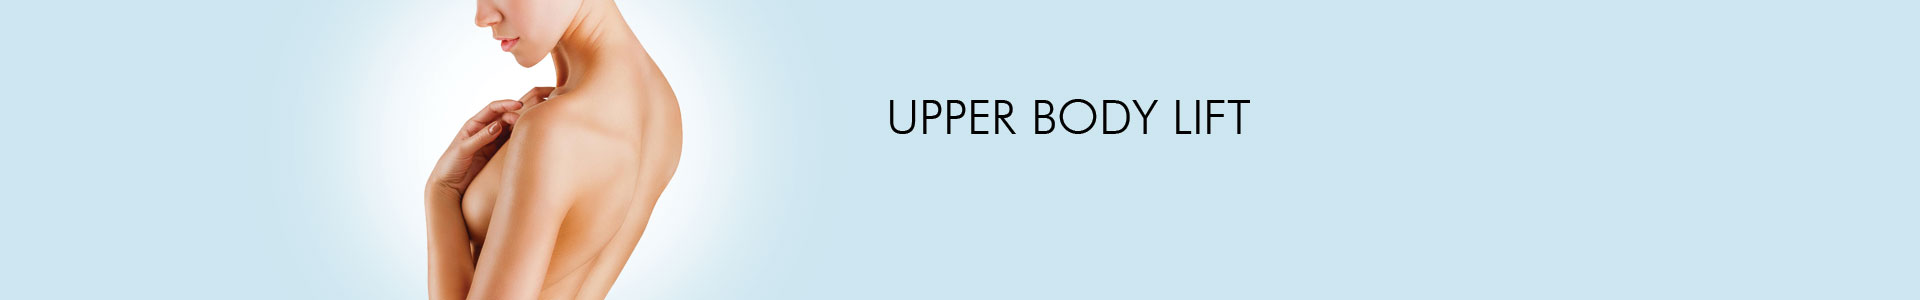 Upper Body Lift